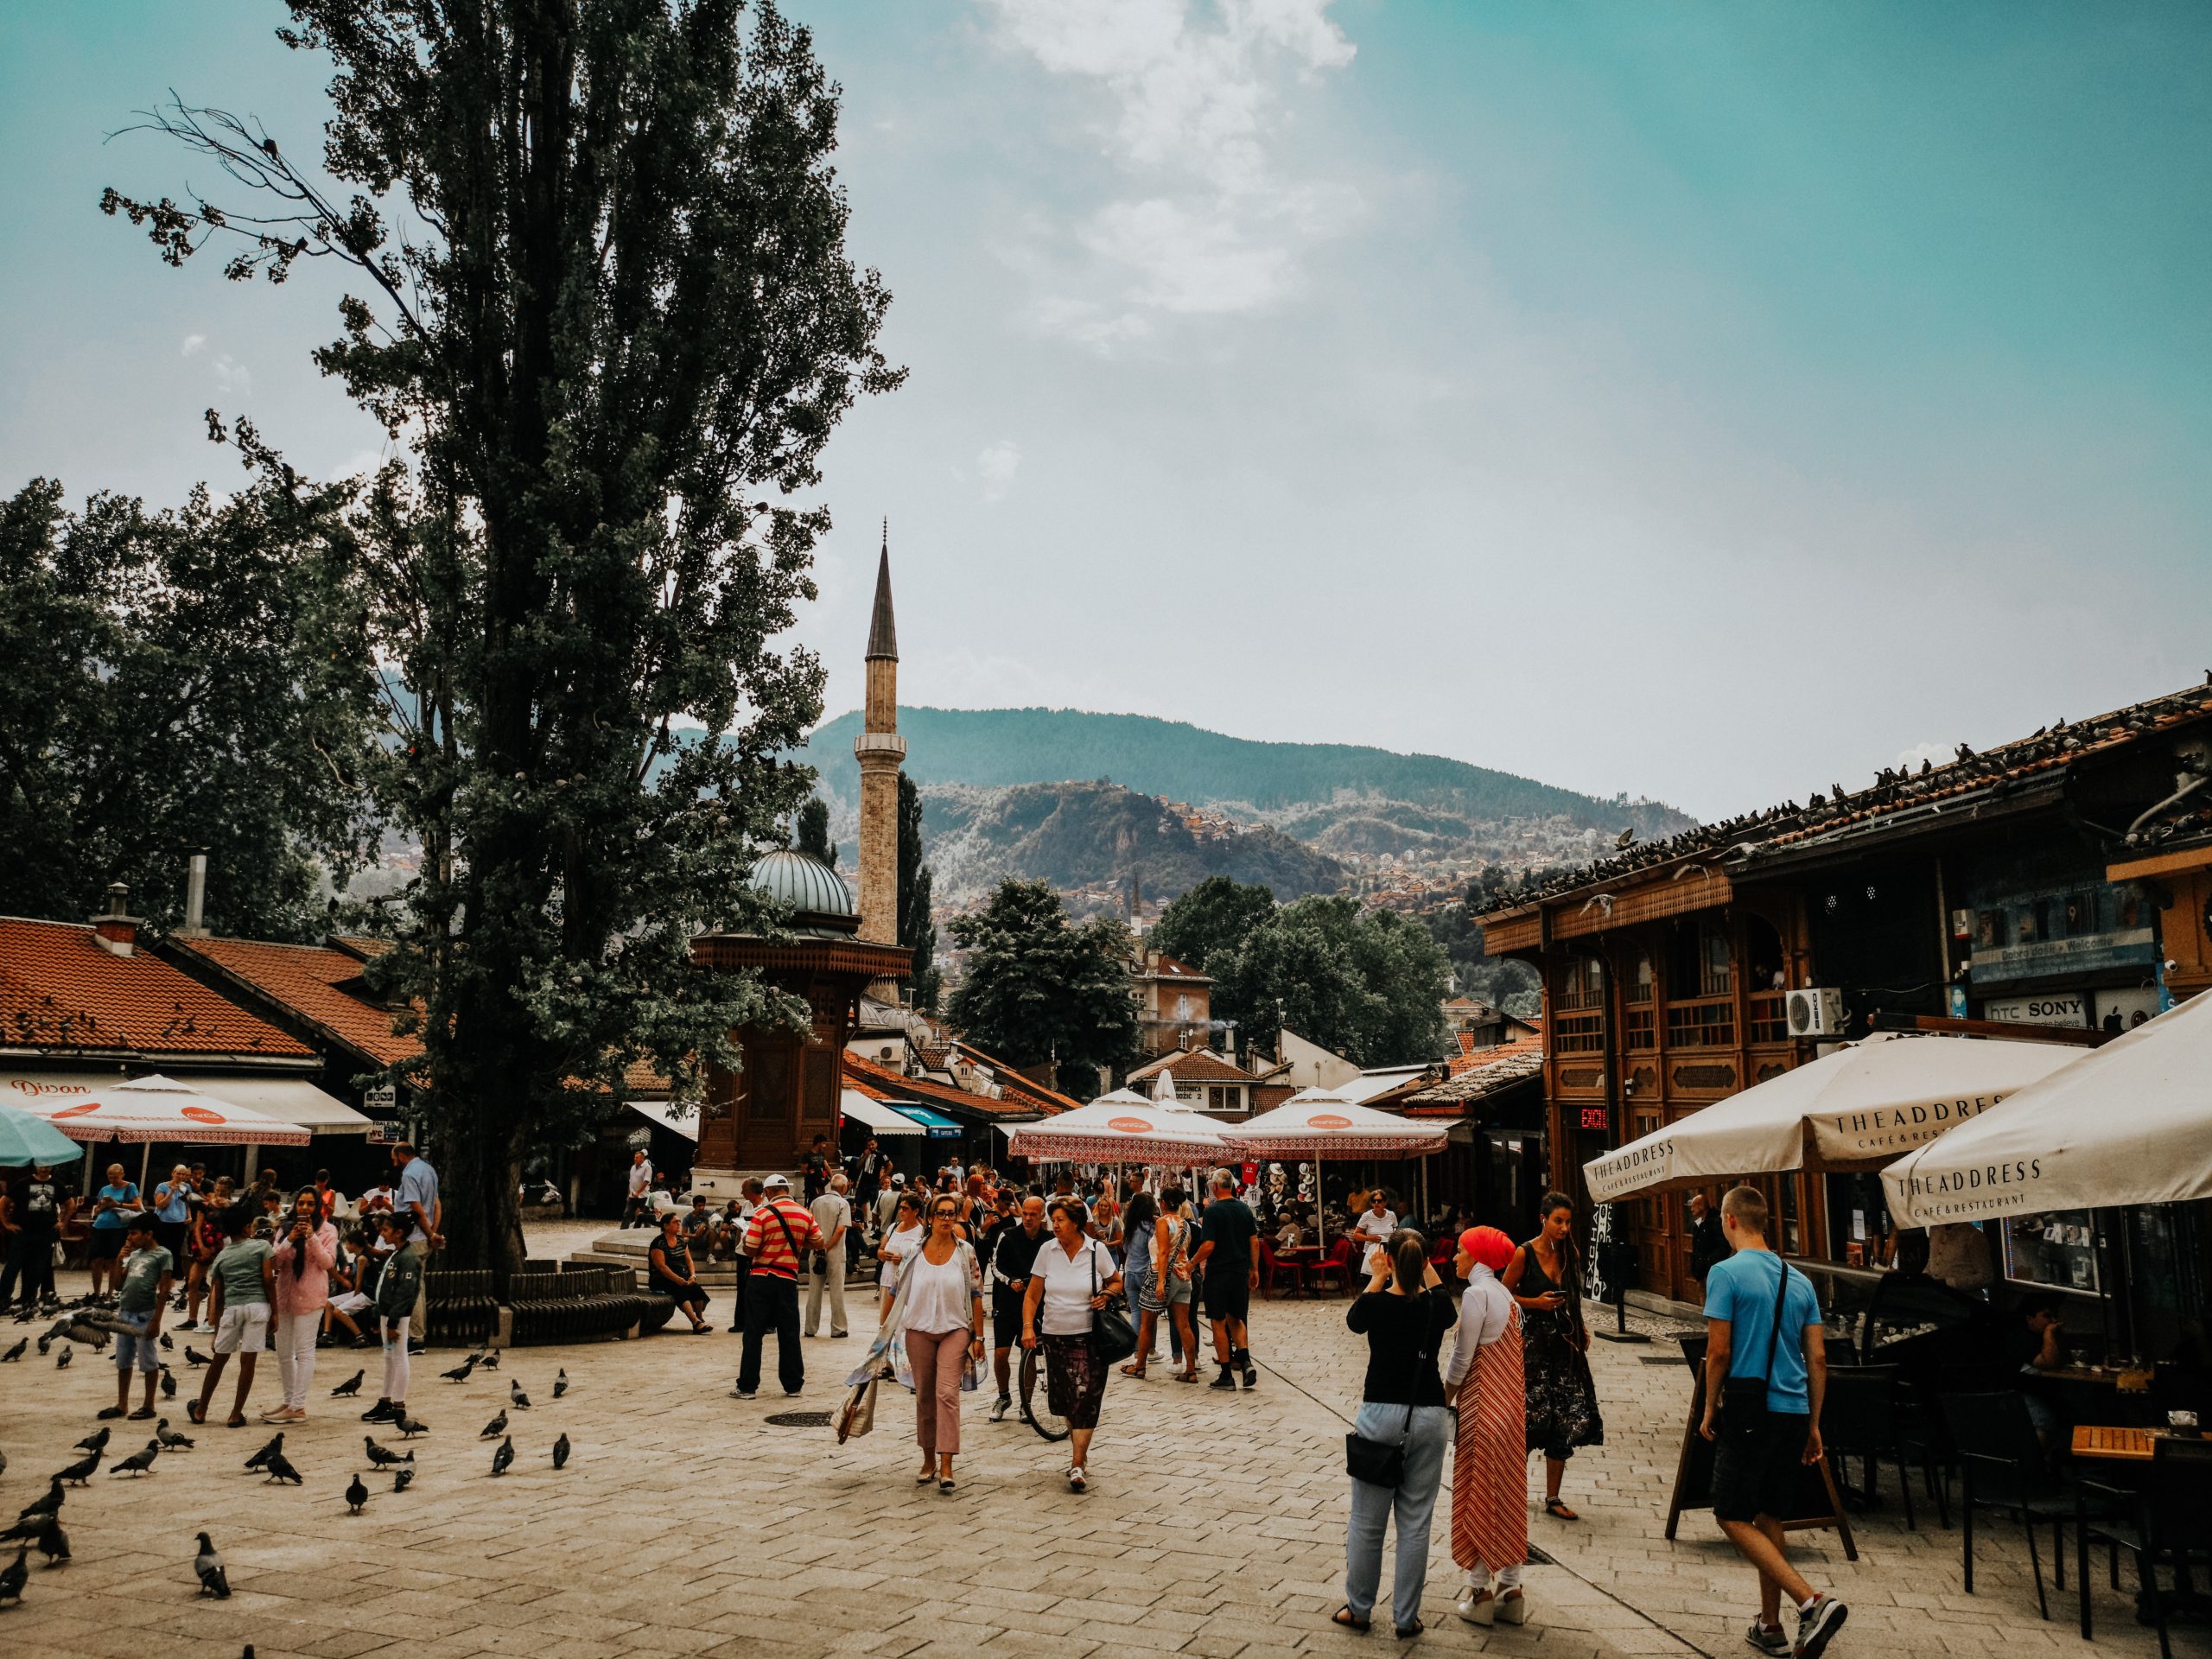 The Undiscovered guide to Sarajevo